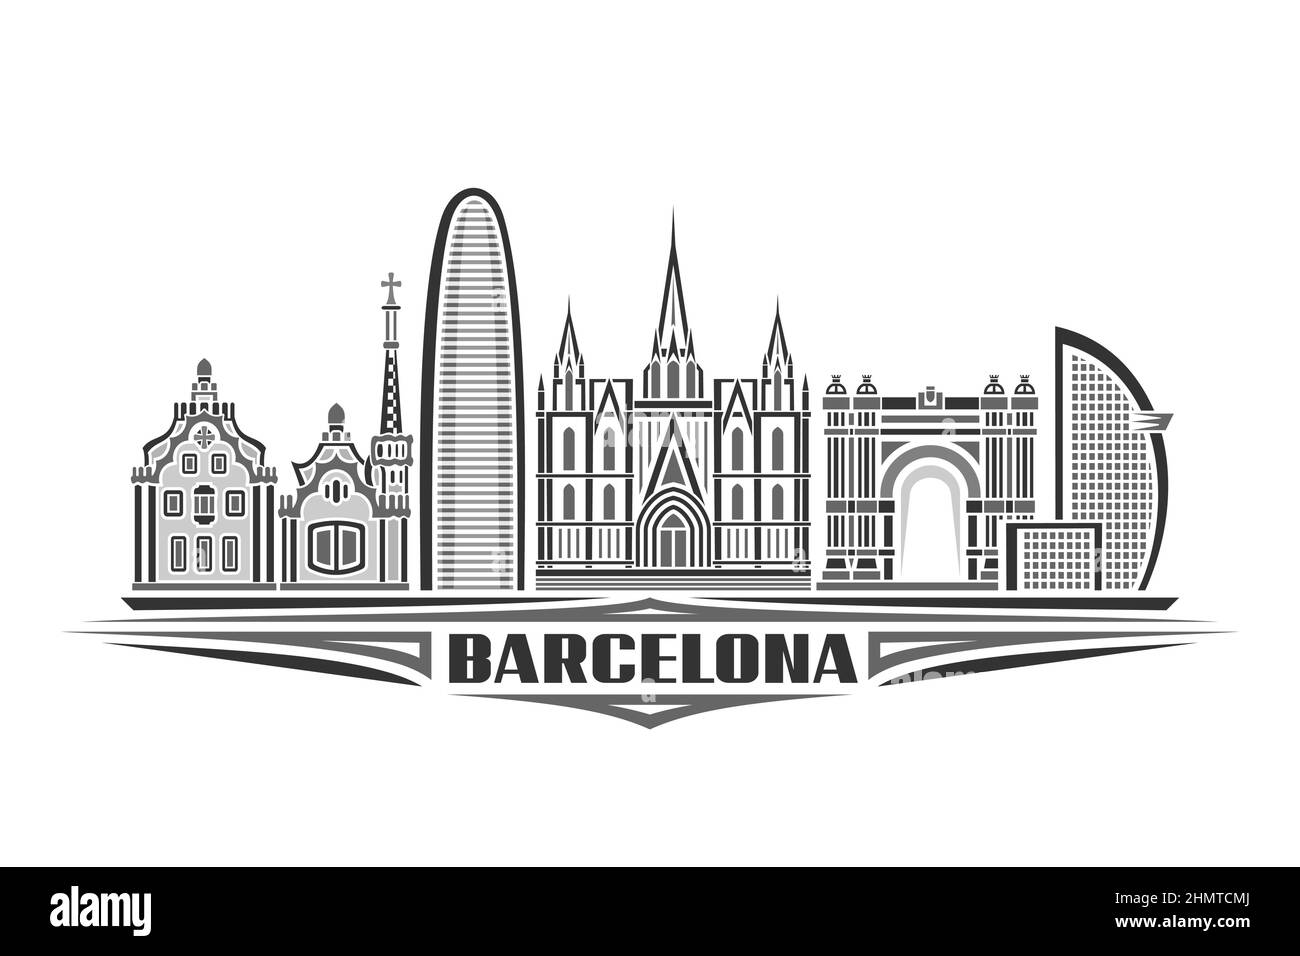 Vektor-Illustration von Barcelona, monochromes horizontales Poster mit linearem Design barcelona City scape, urbanes Linienkunstkonzept mit dekorativen Schriftzügen Stock Vektor